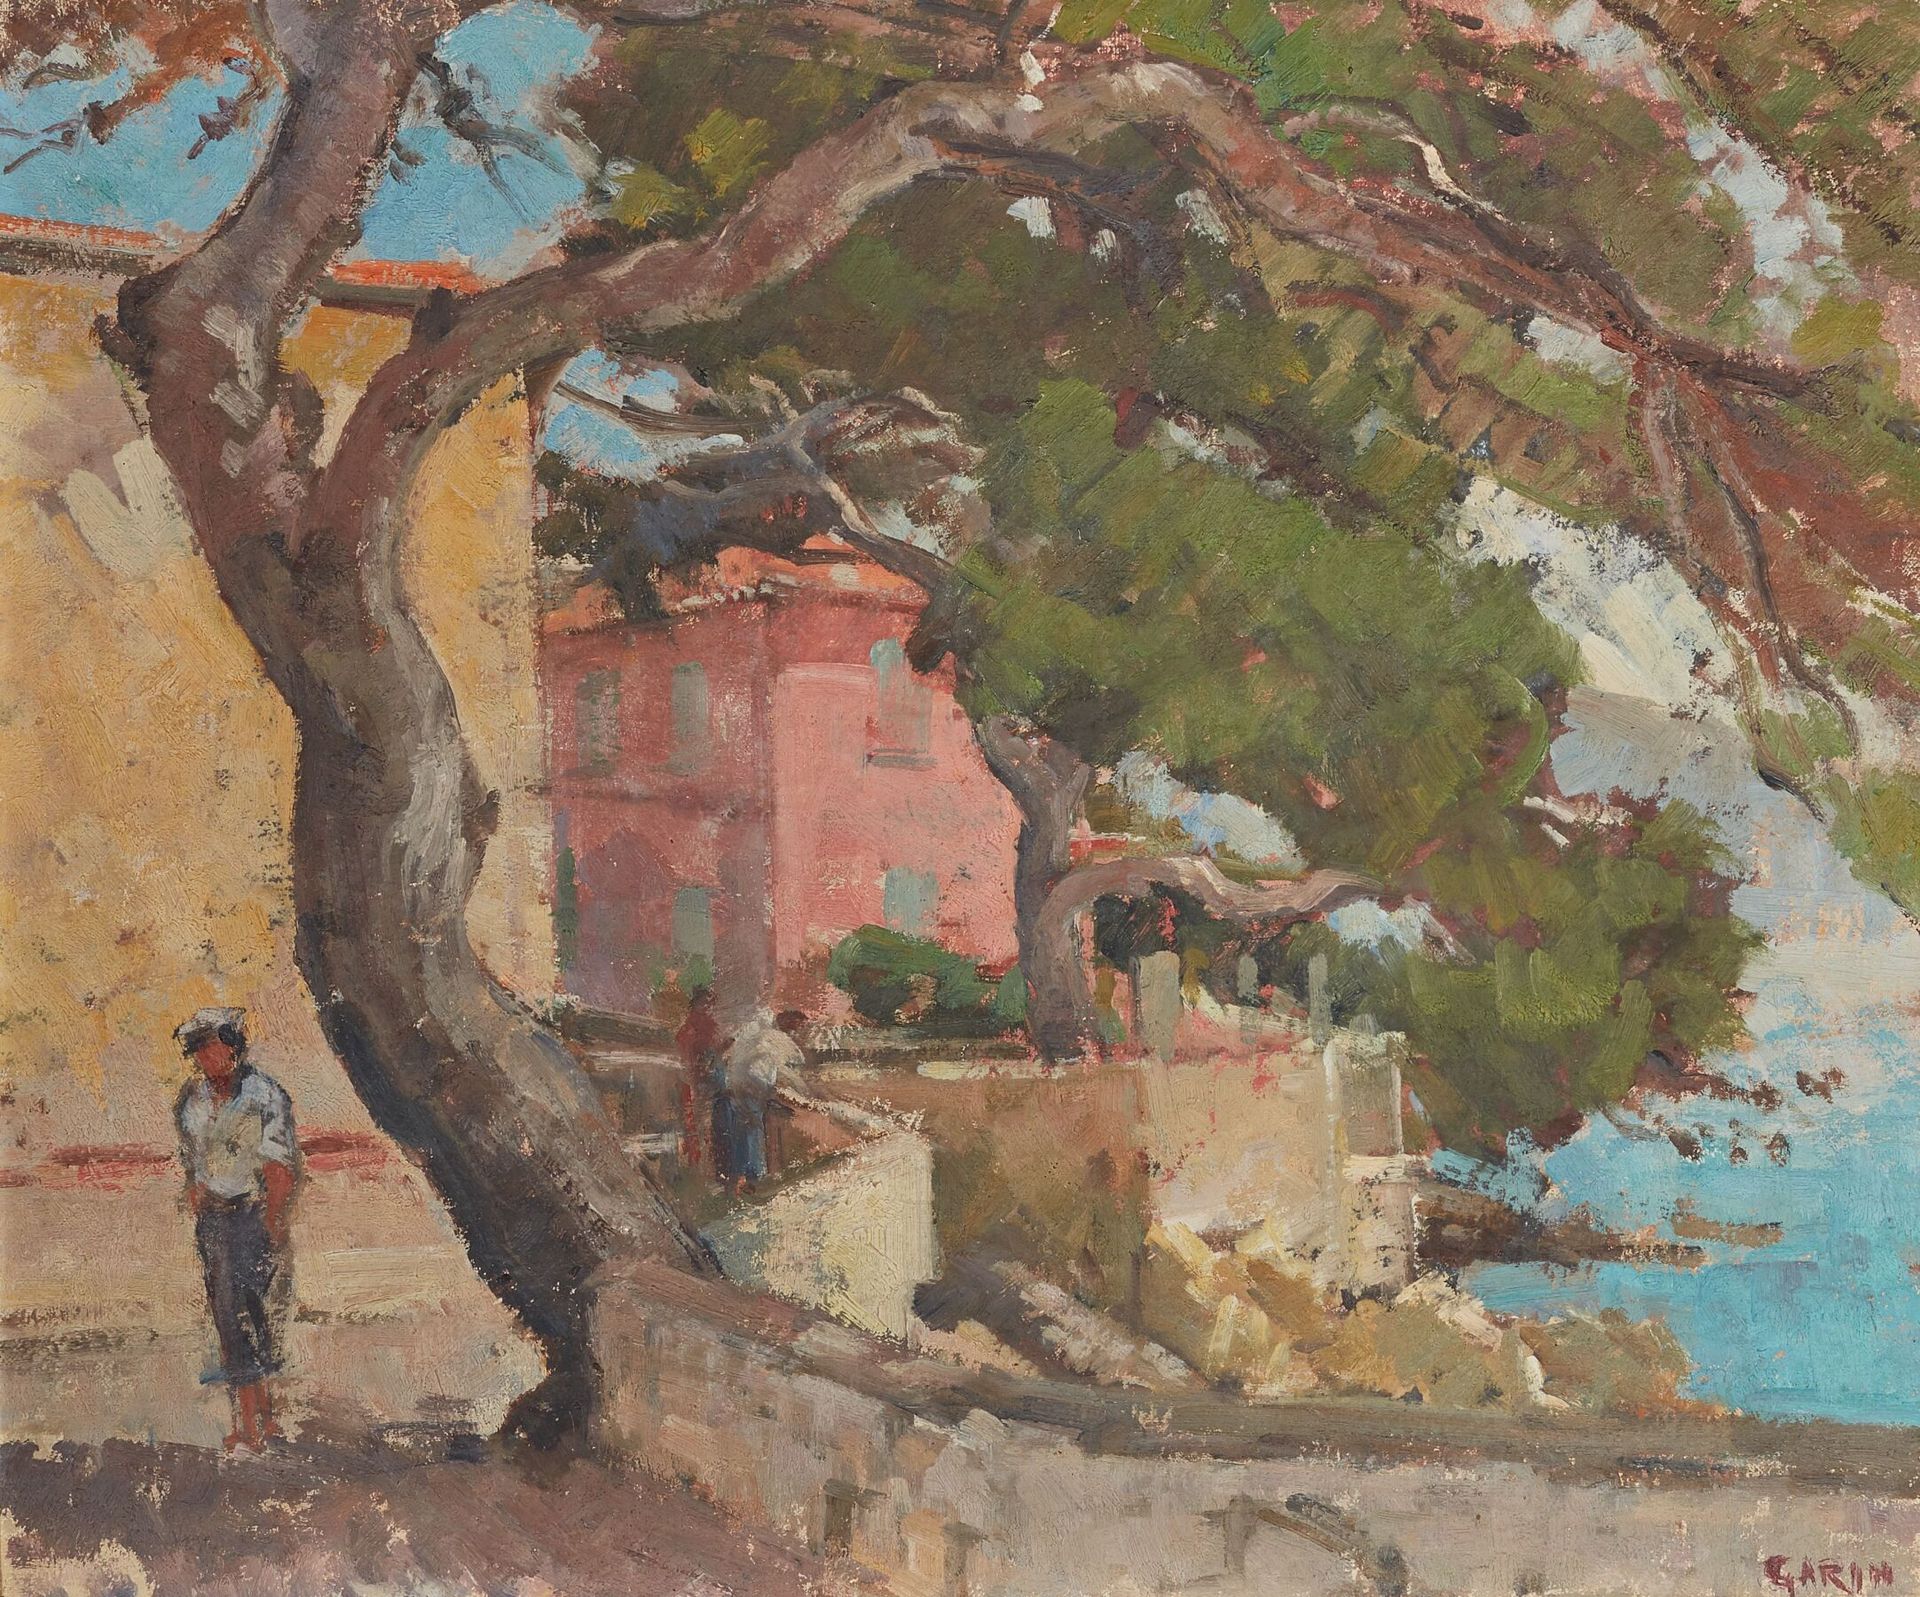 Null Paul GARIN (artista de Niza, 1898-1963).
La Corniche de Beaulieu.
Óleo sobr&hellip;